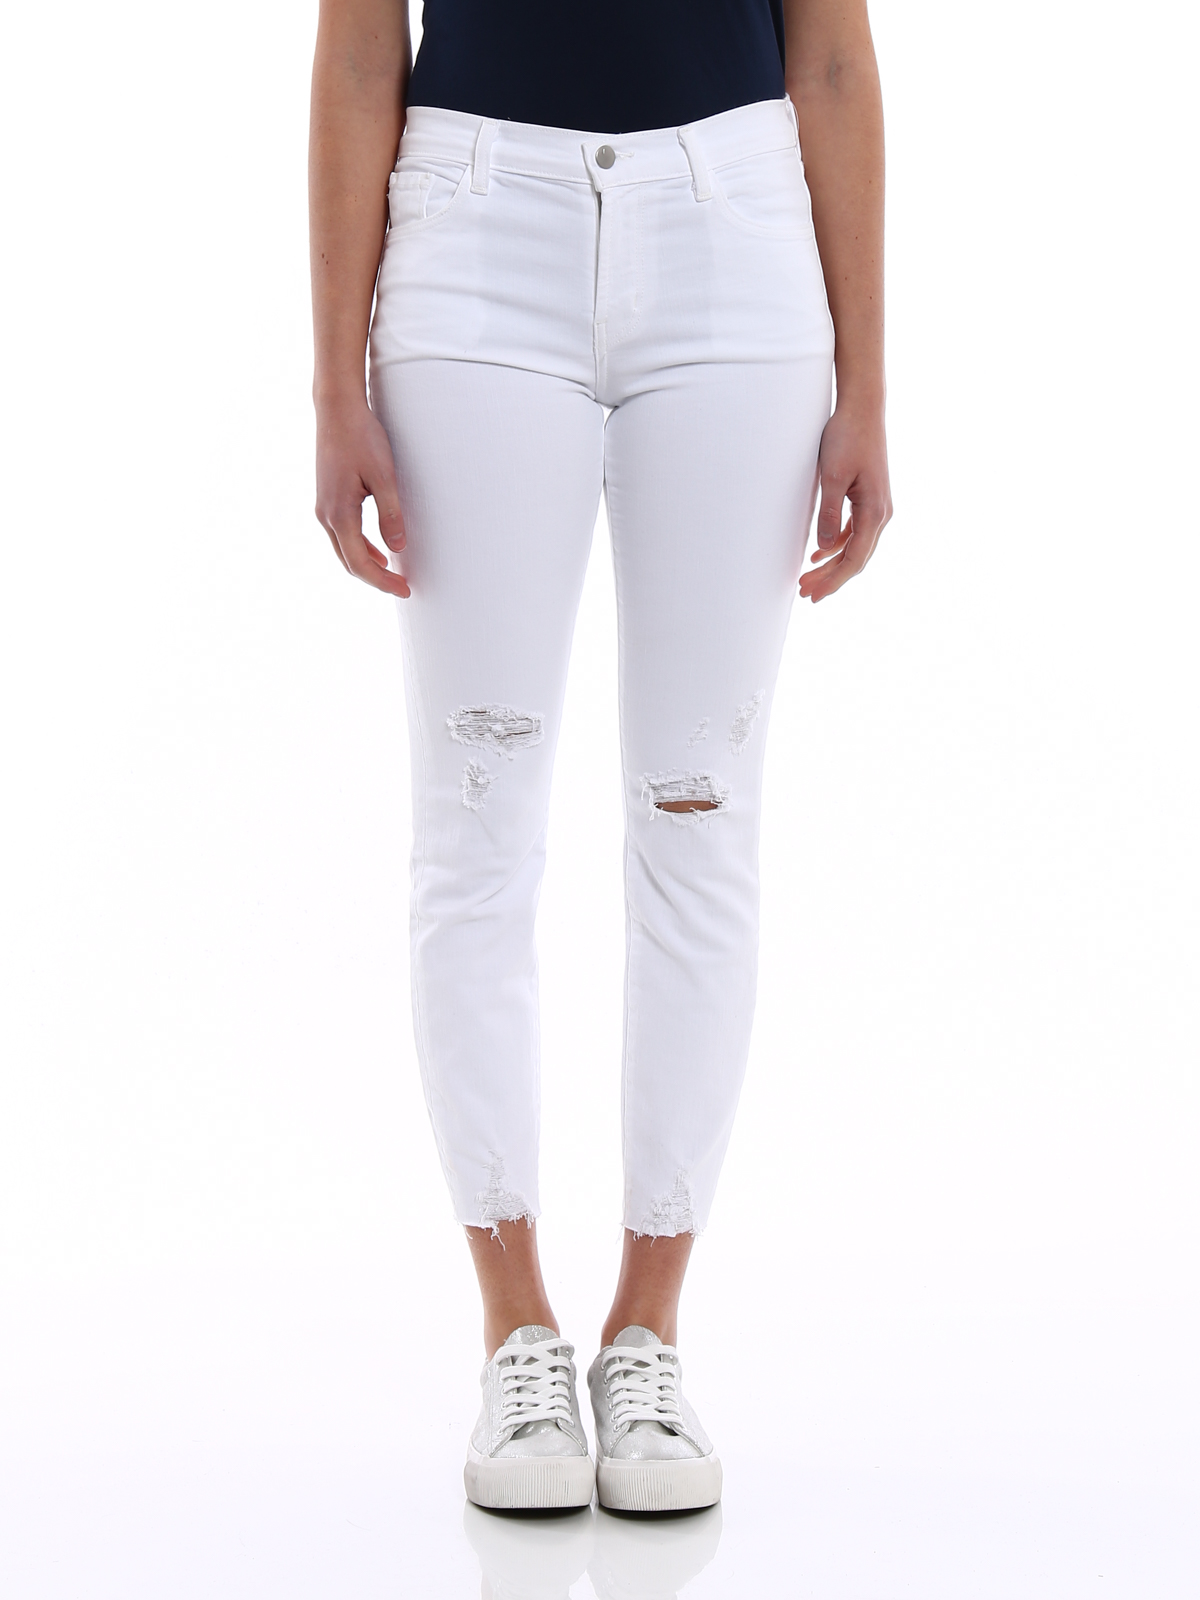 J Brand Capri Mid Rise Skinny Jeans Jb Underexposed